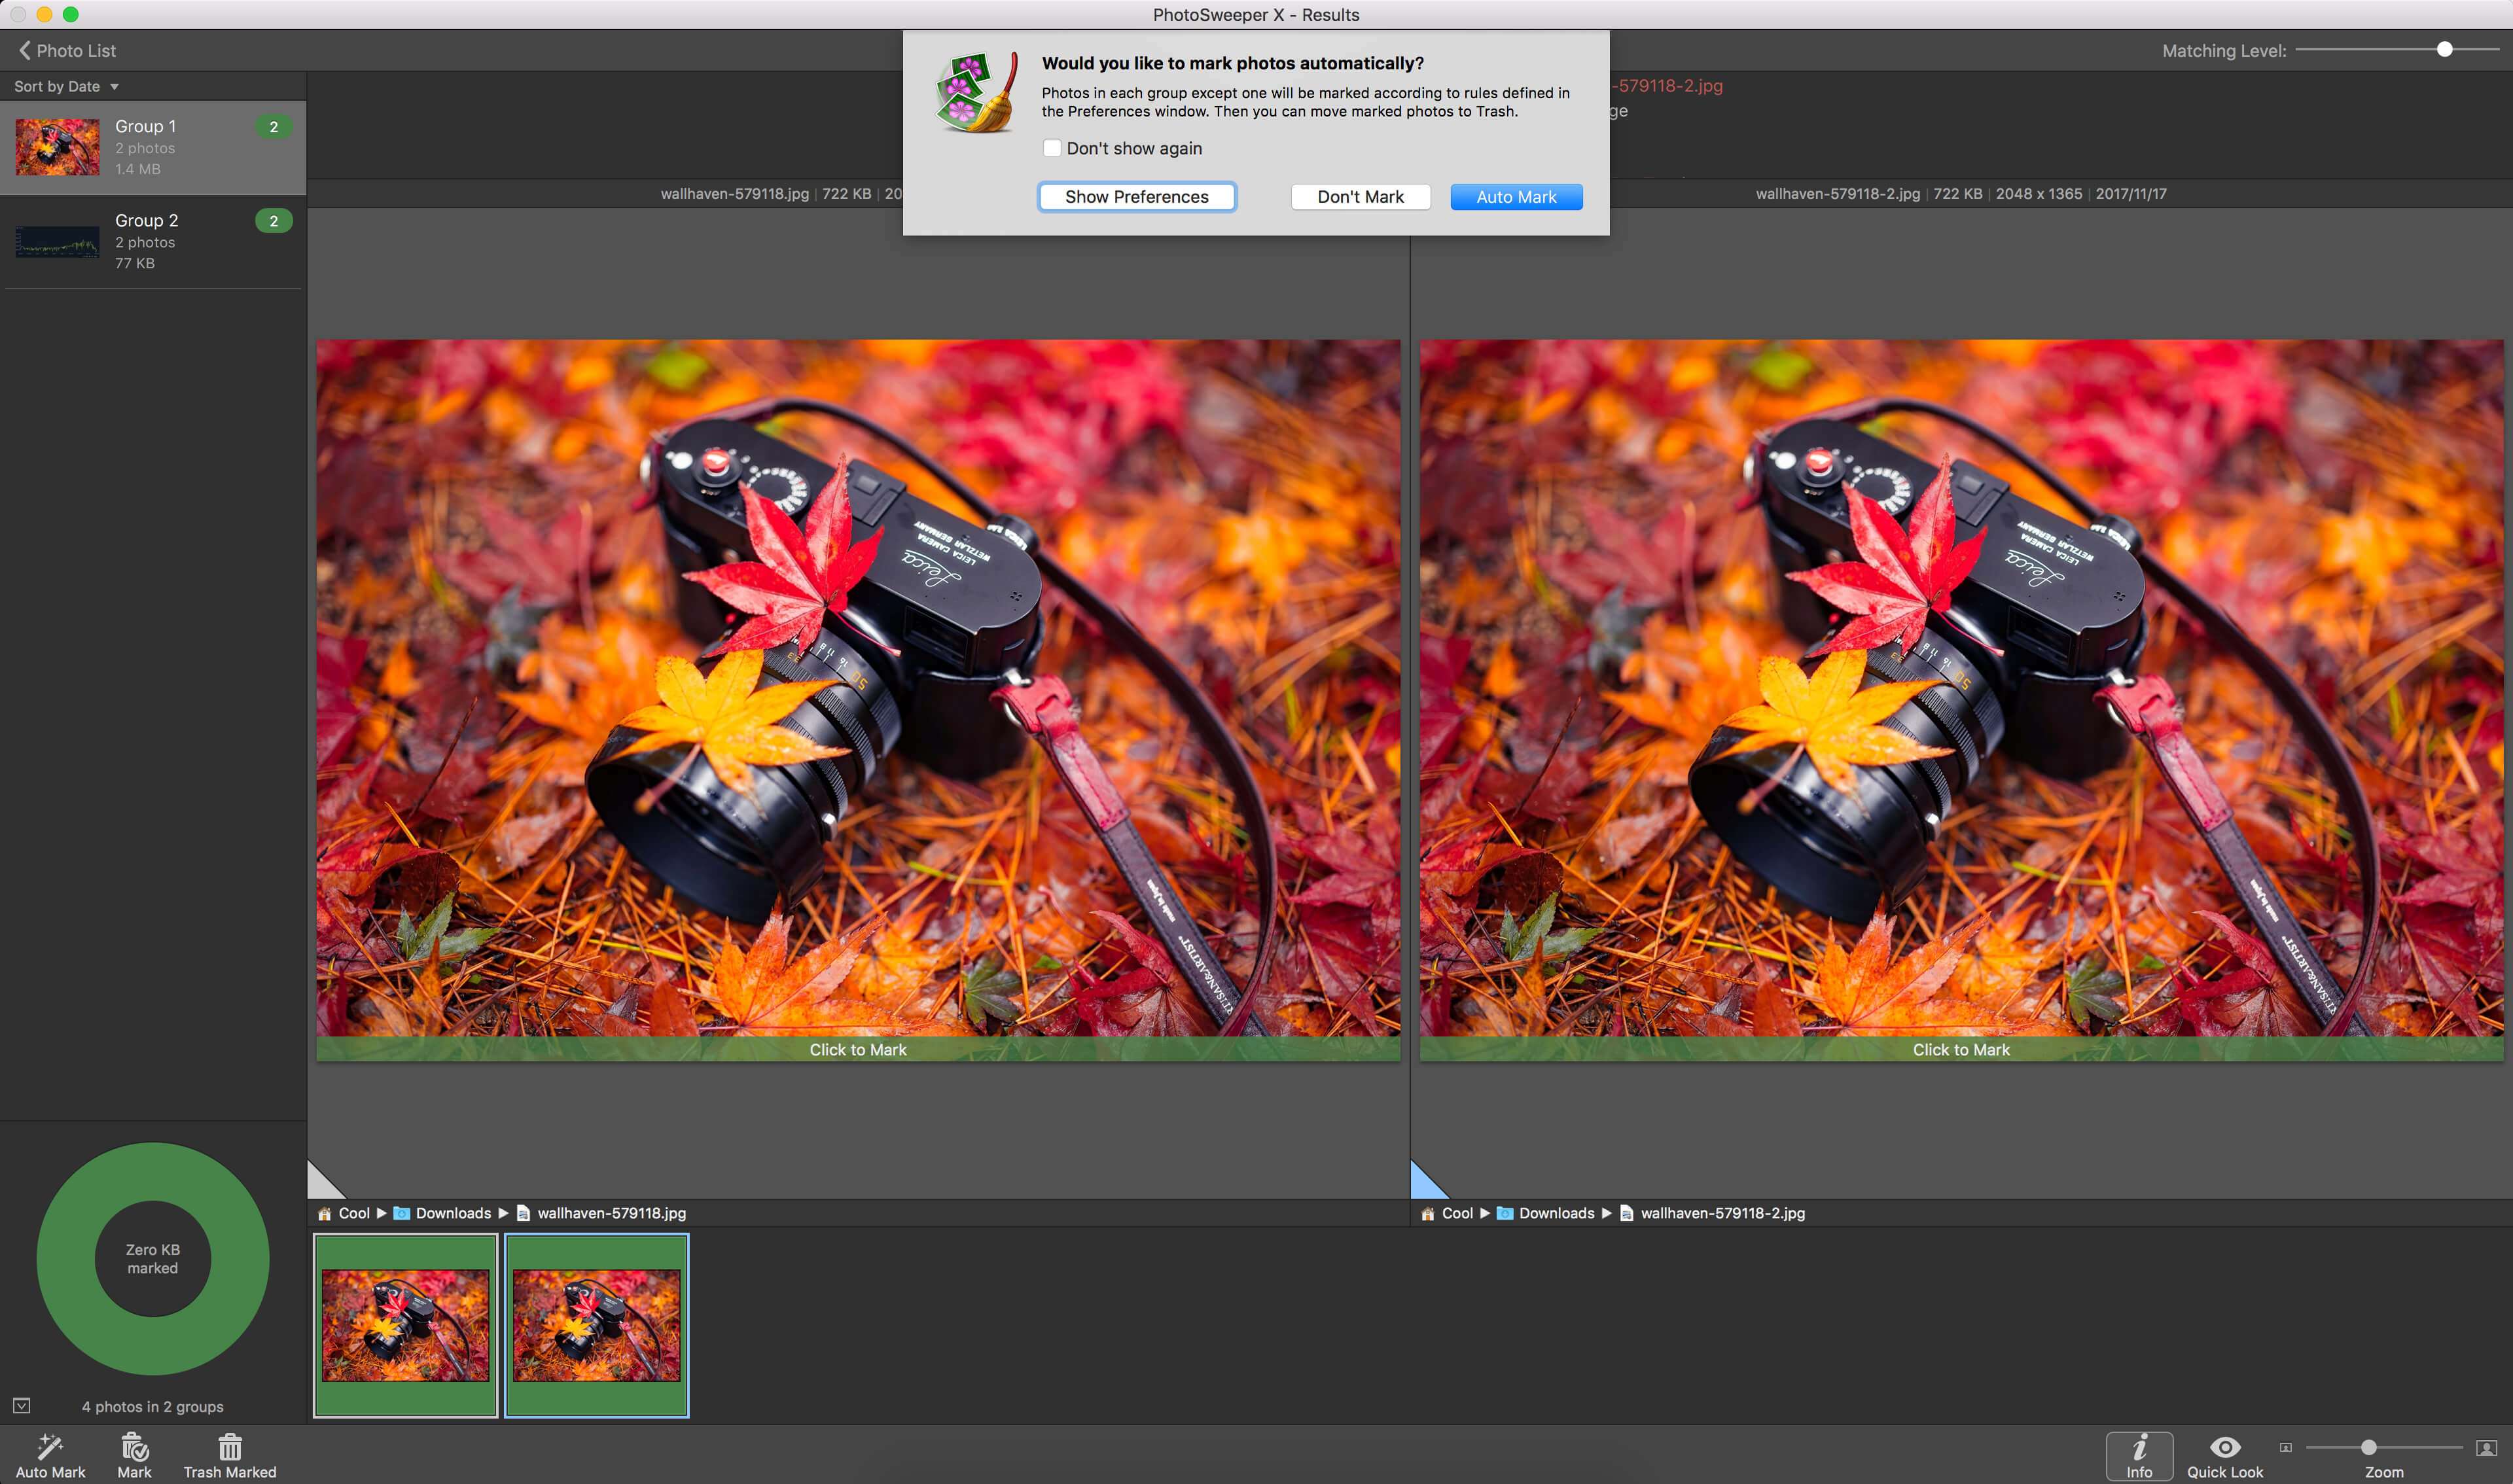 PhotoSweeper 3.4.0 清除电脑上重复照片 - 马可菠萝.jpg